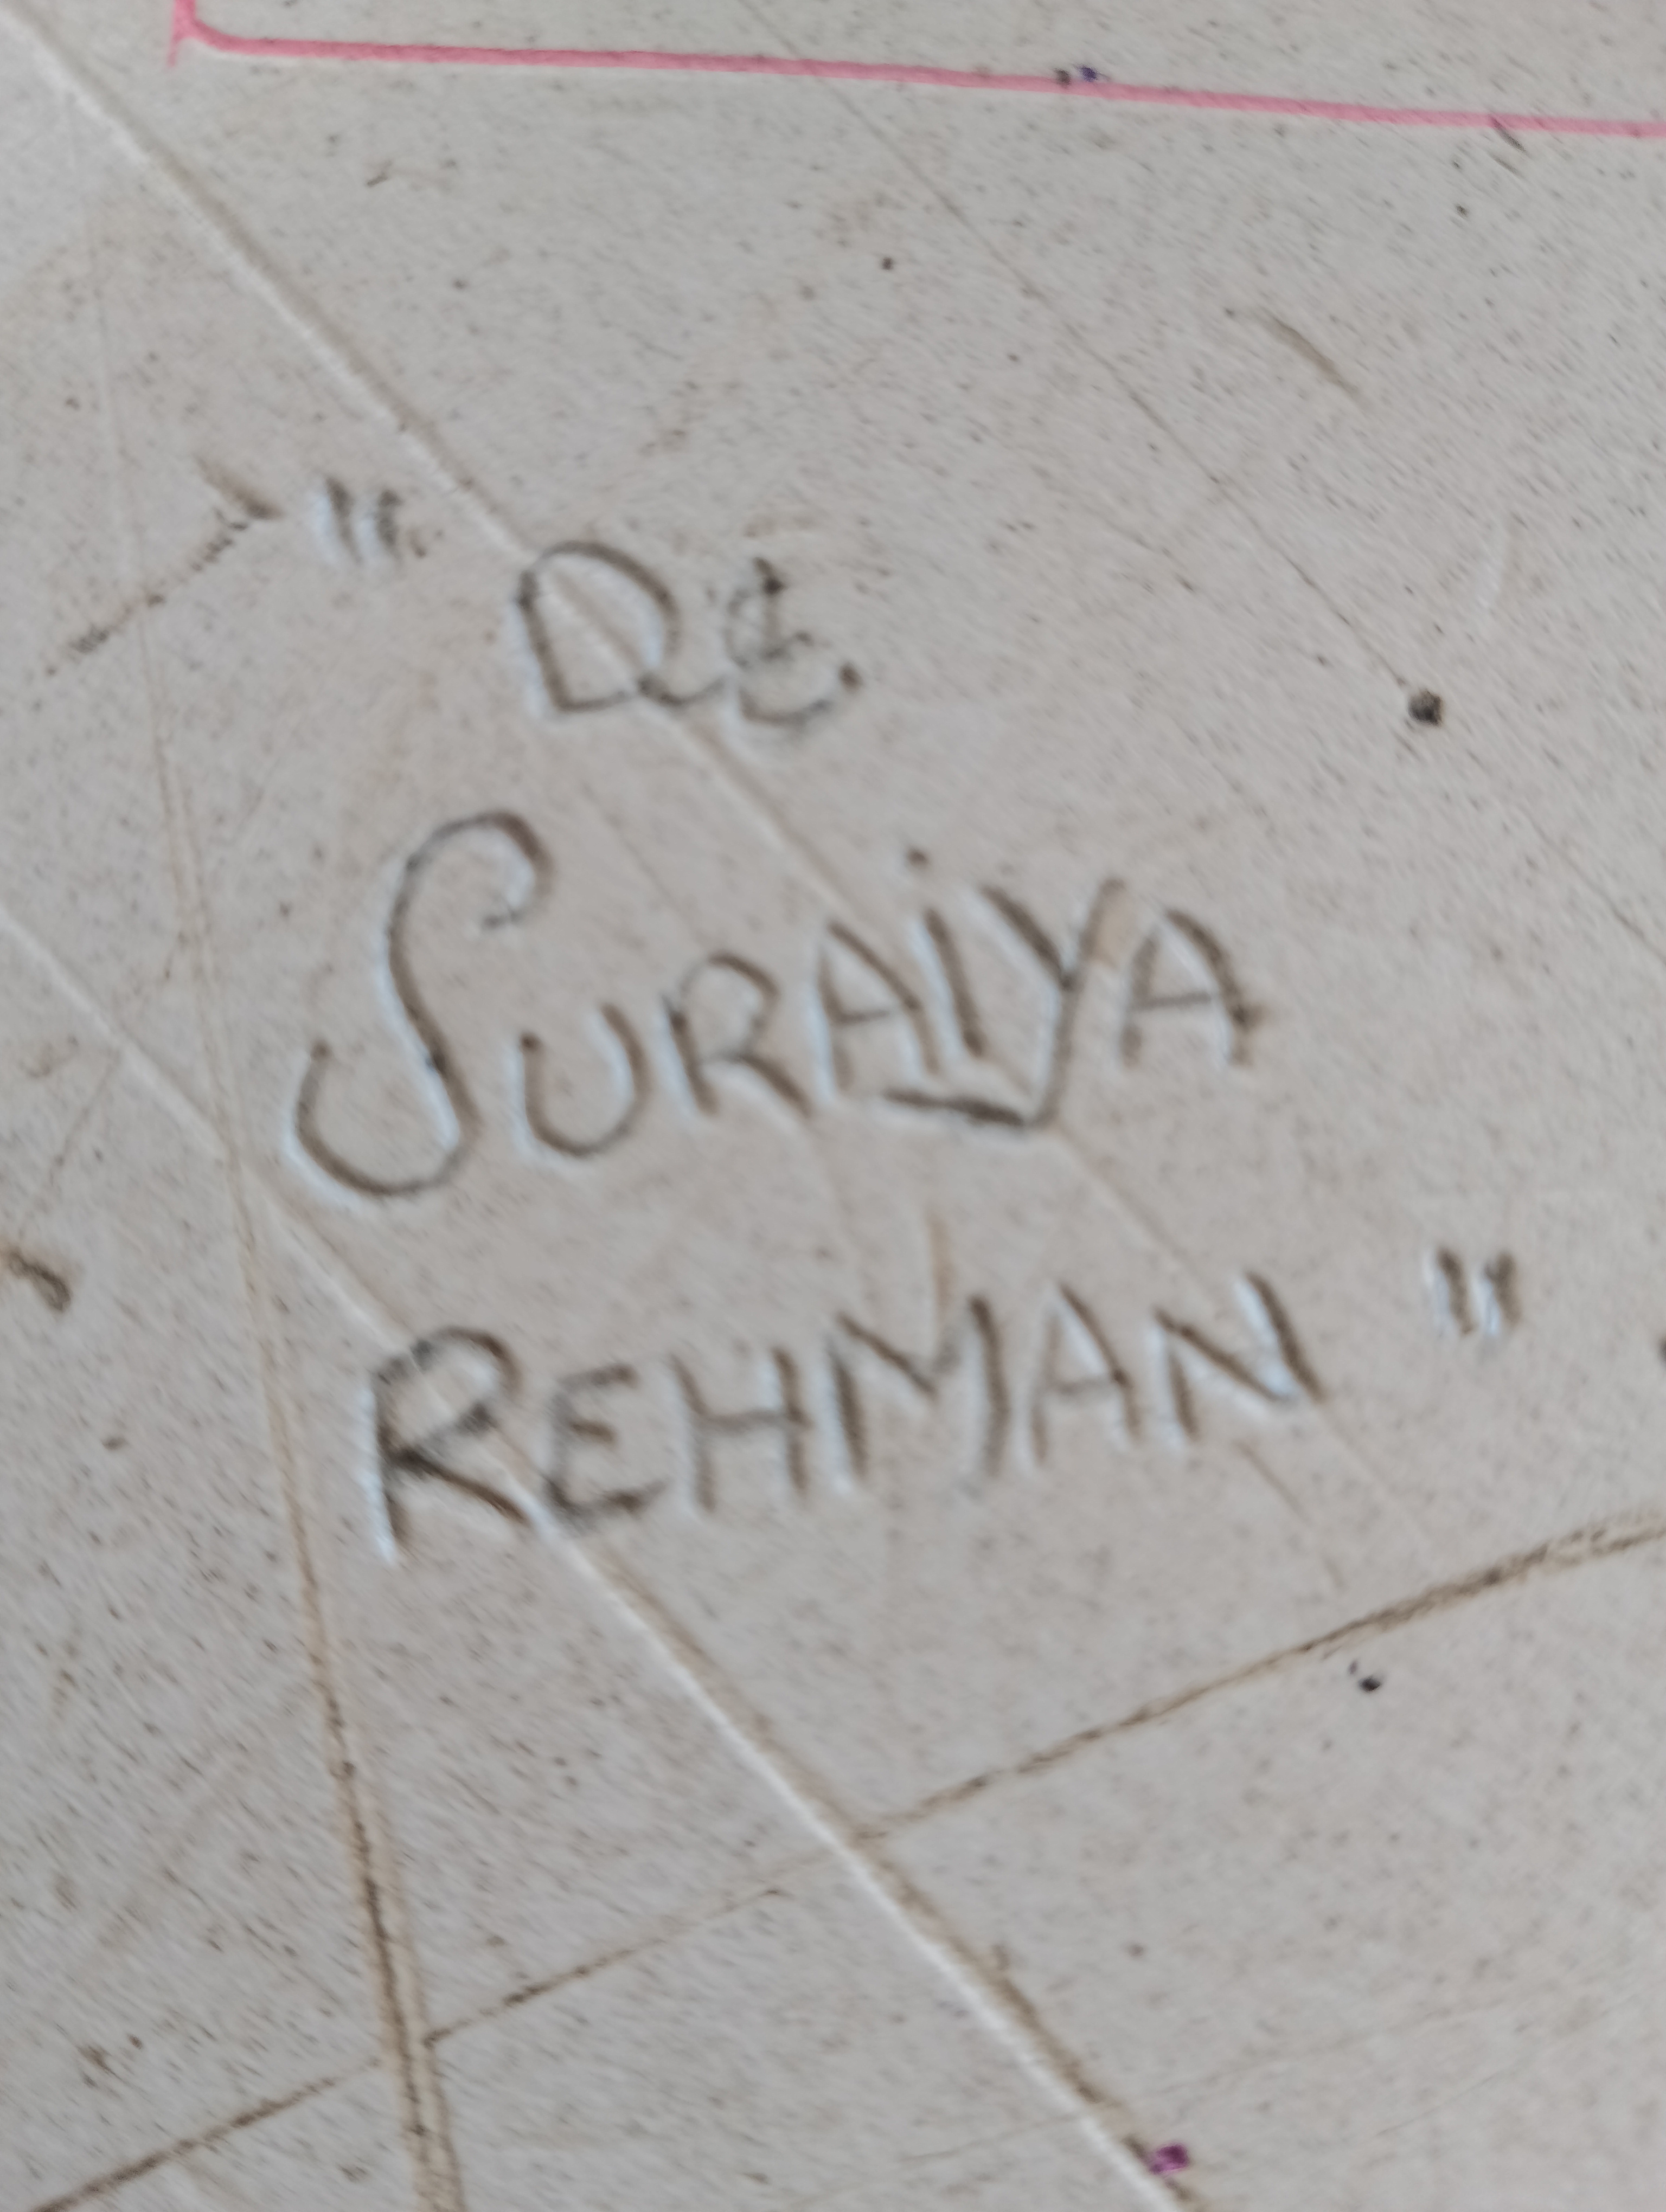 Suraiya Rehman